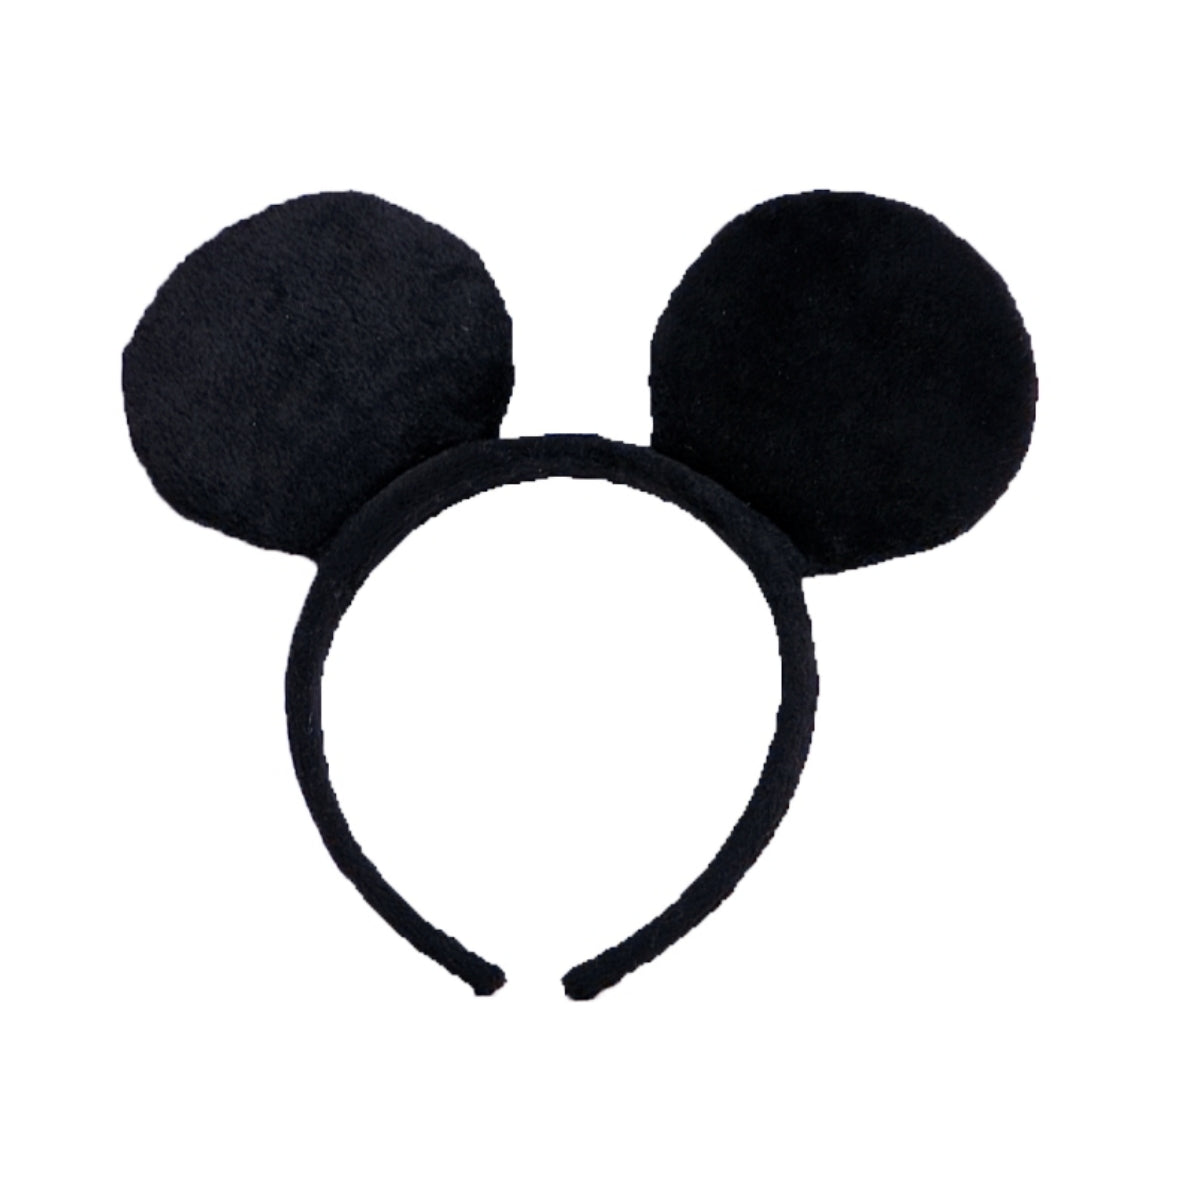 Mr. Mouse Ears - Headband